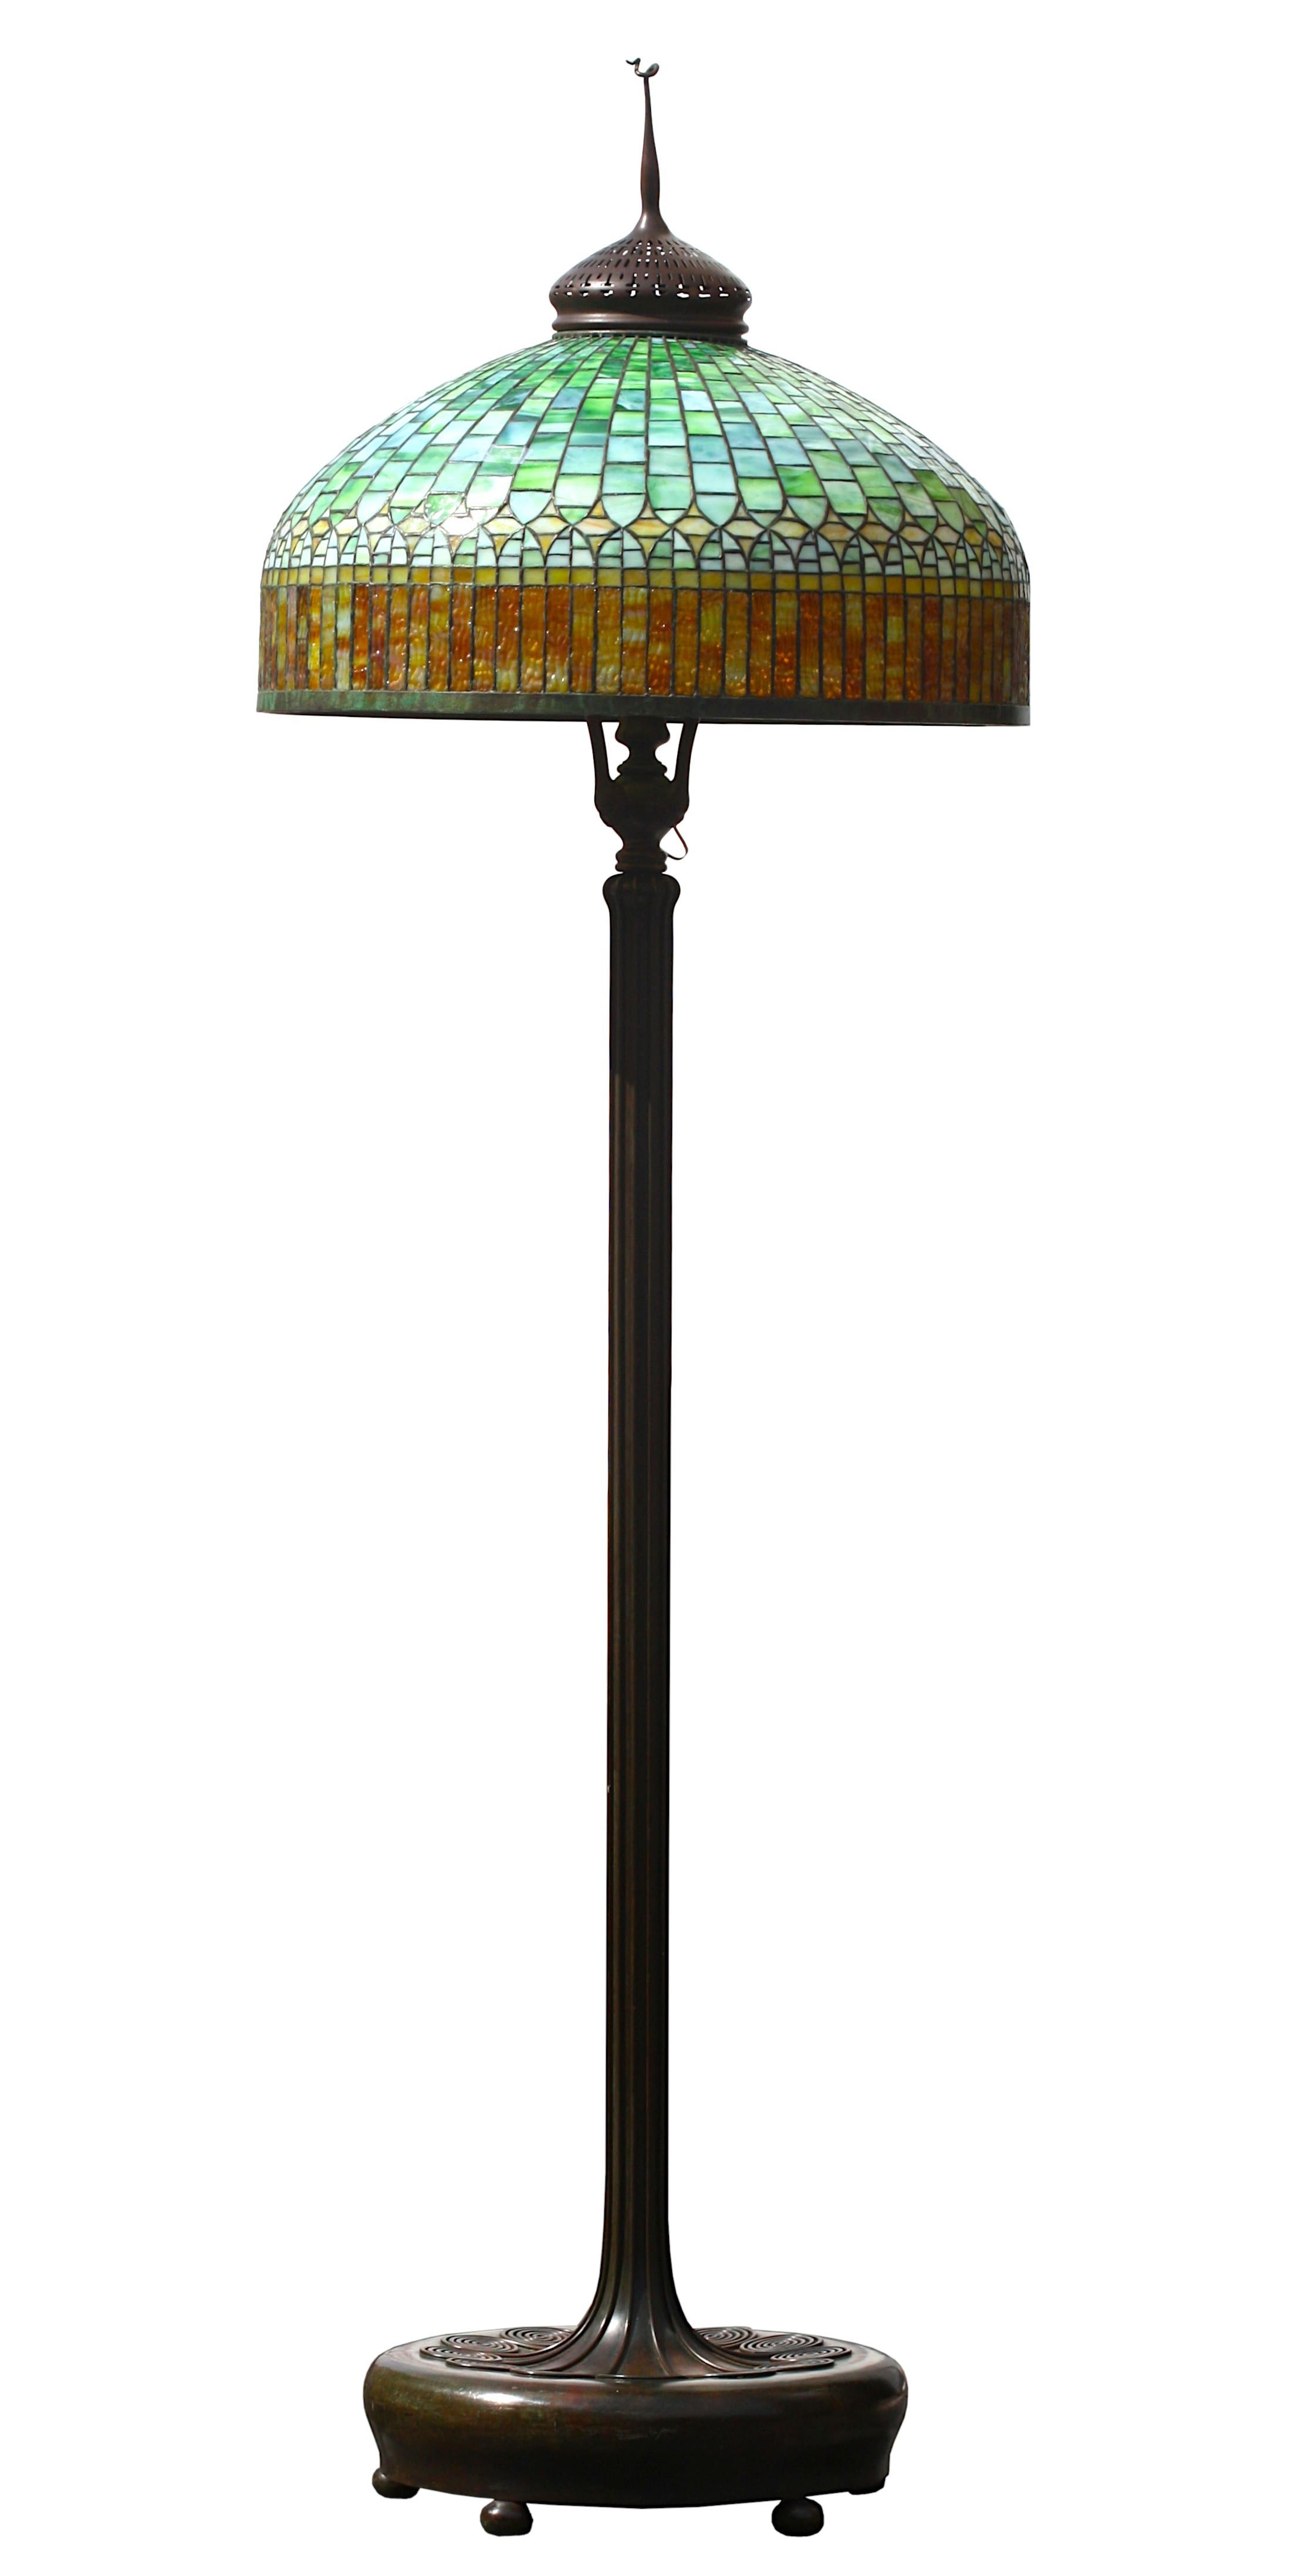 
Tiffany Studios
“Curtain Border” Floor Lamp
1899-1920
